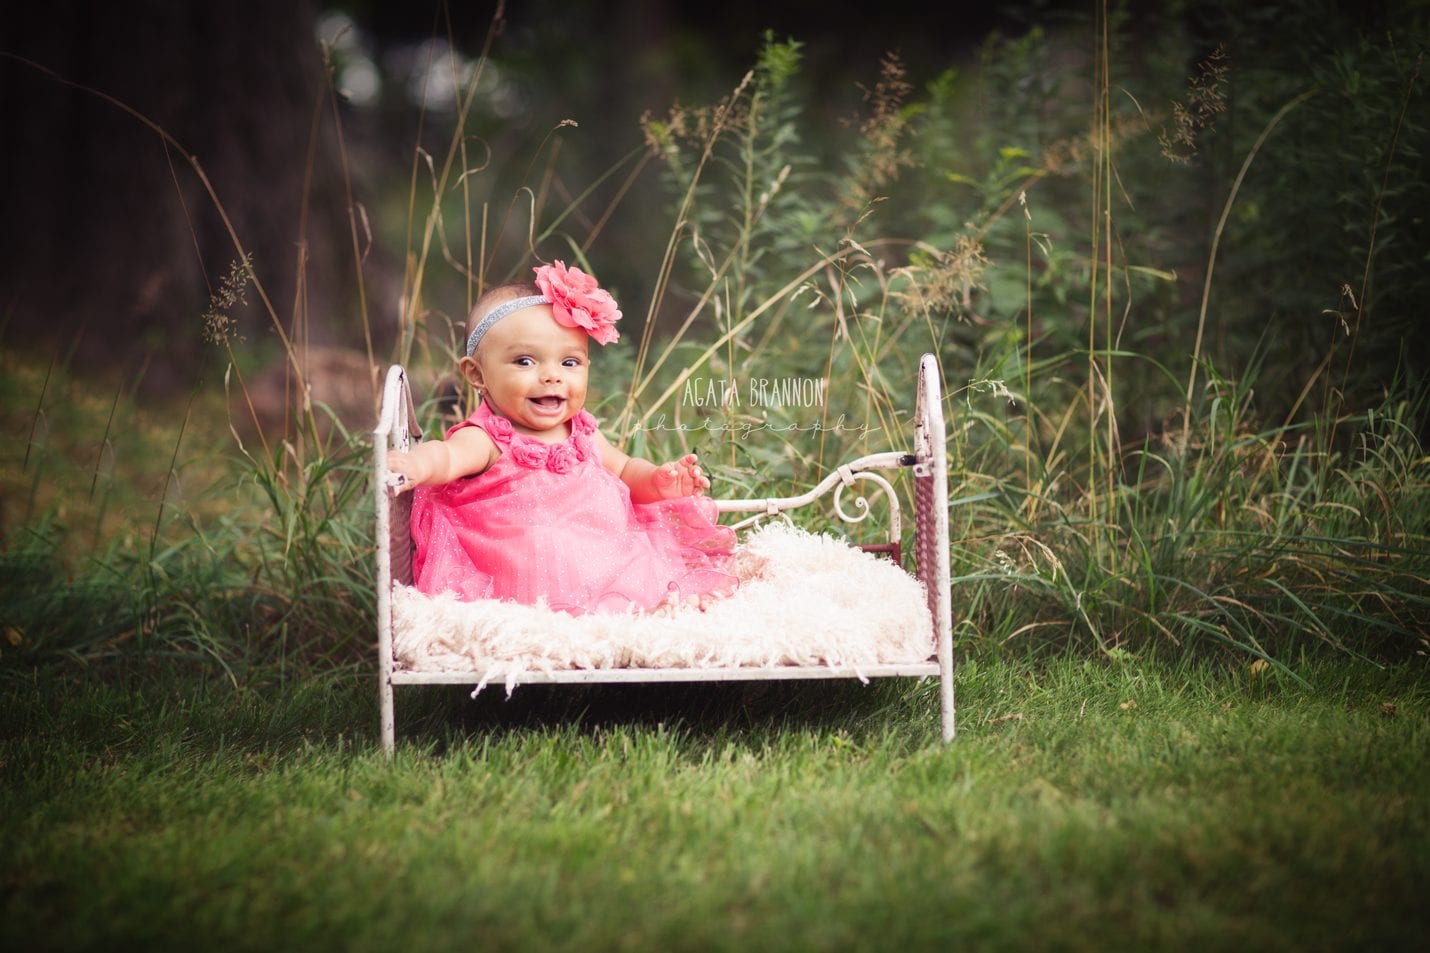 Palatine Baby Photographer | Agata Brannon Photography